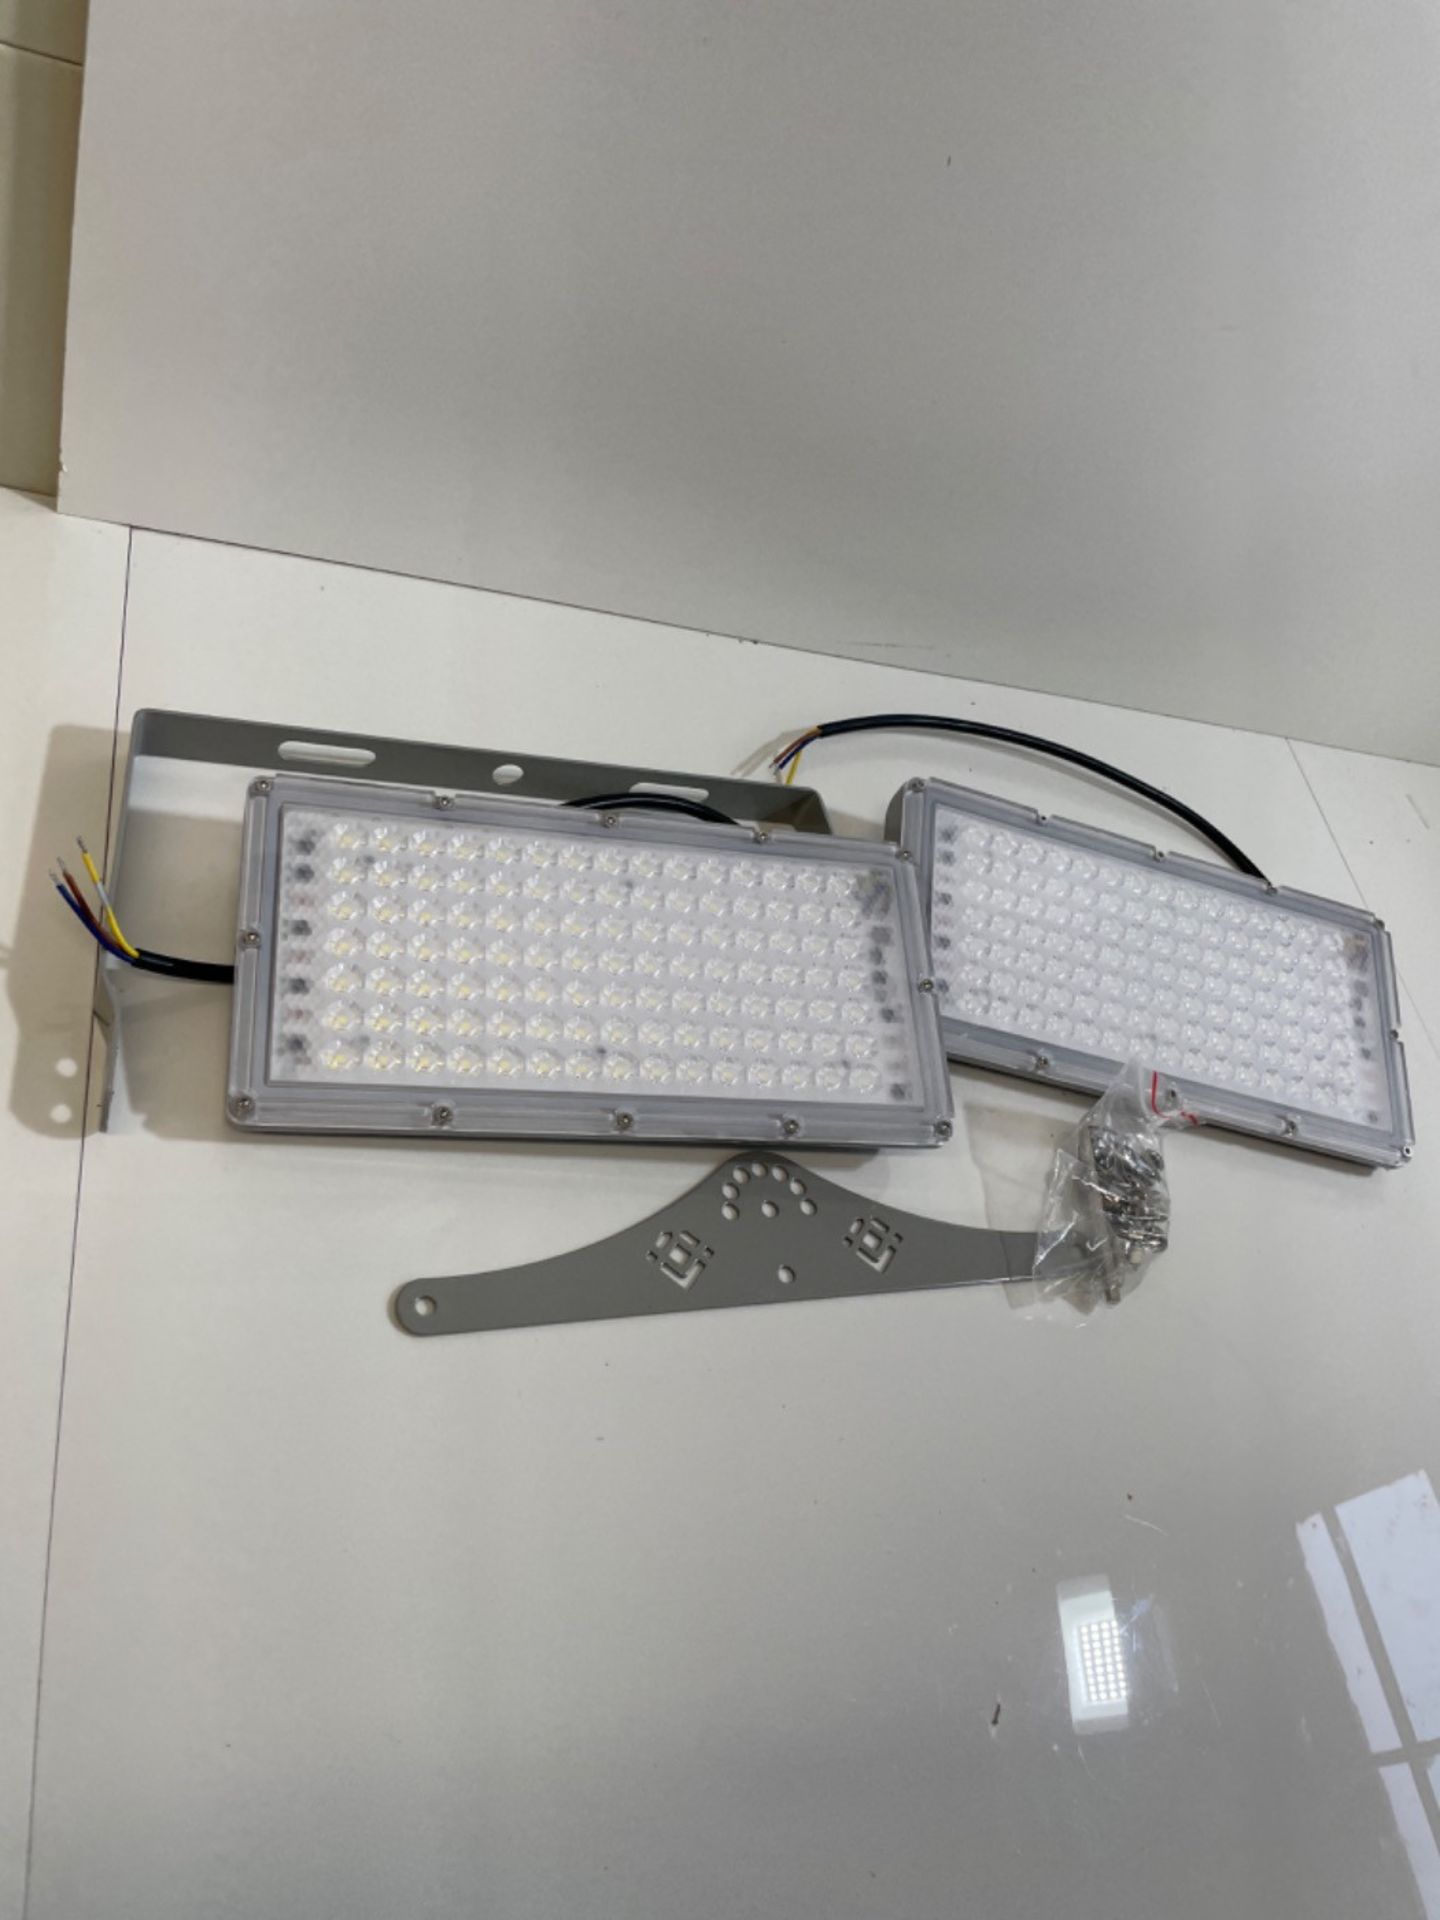 Viugreum 300W Outdoor LED Floodlight, IP66 Waterproof Spotlight Security Light, Super Bright 24000l - Image 2 of 3